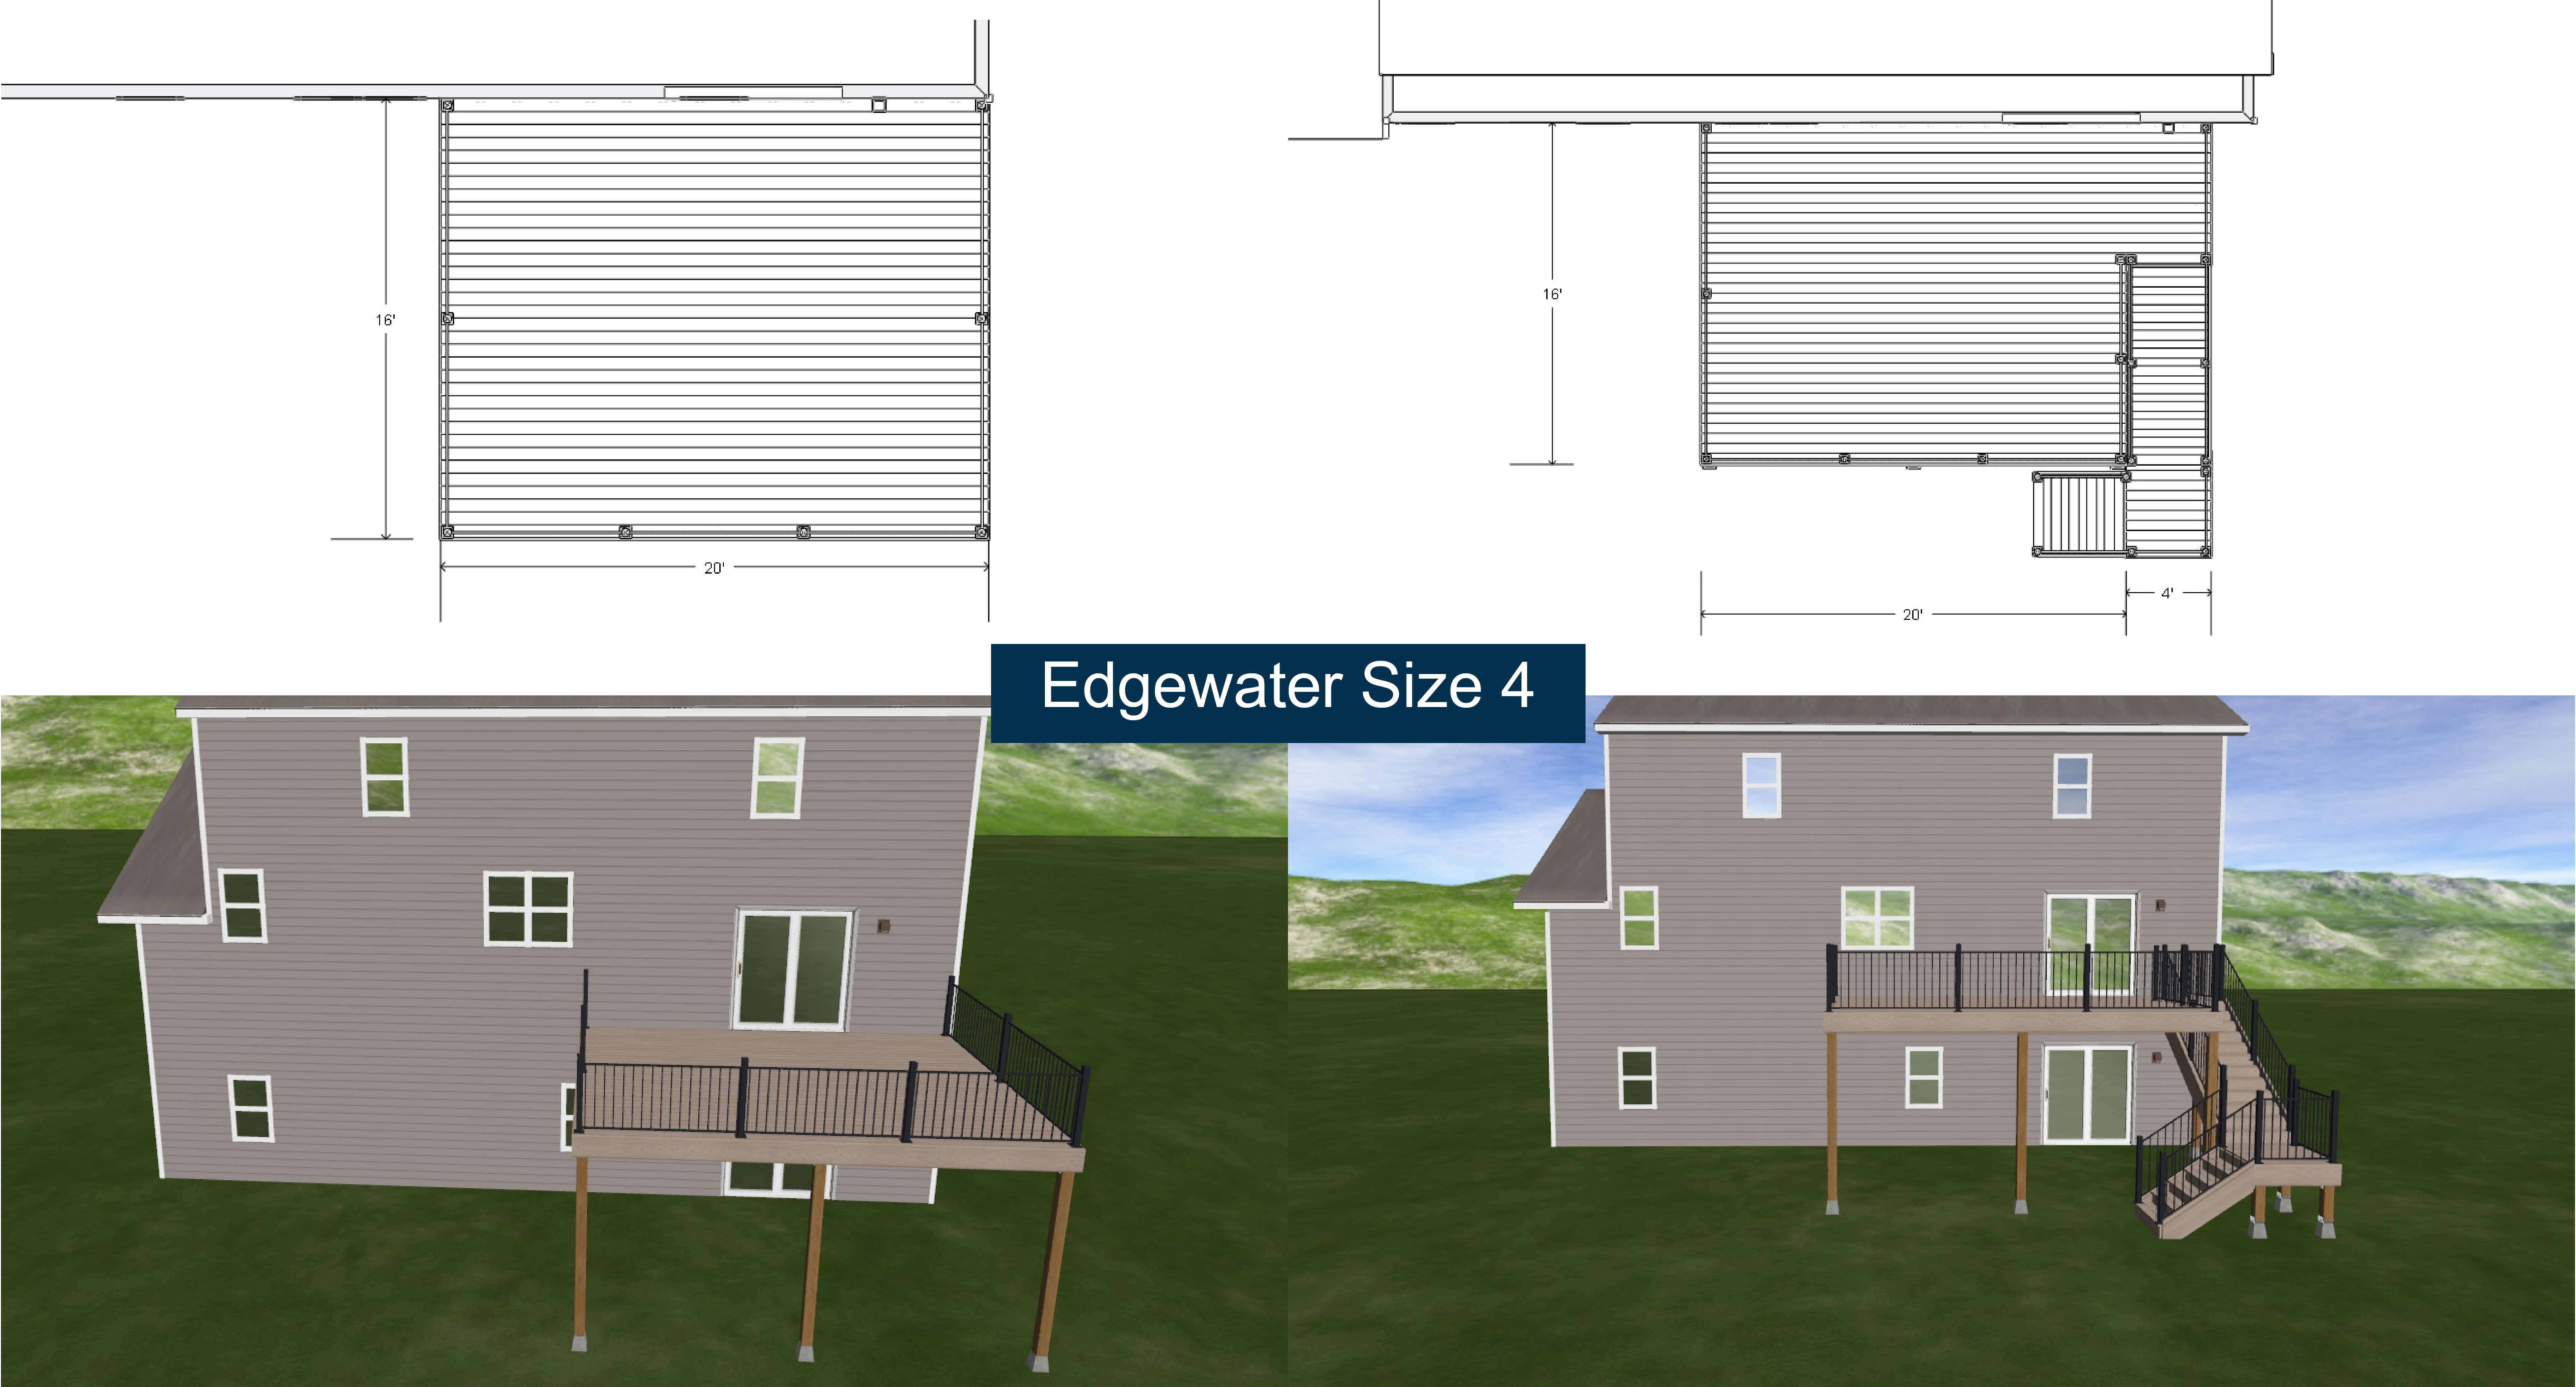 CWeb Edgewater Size 4